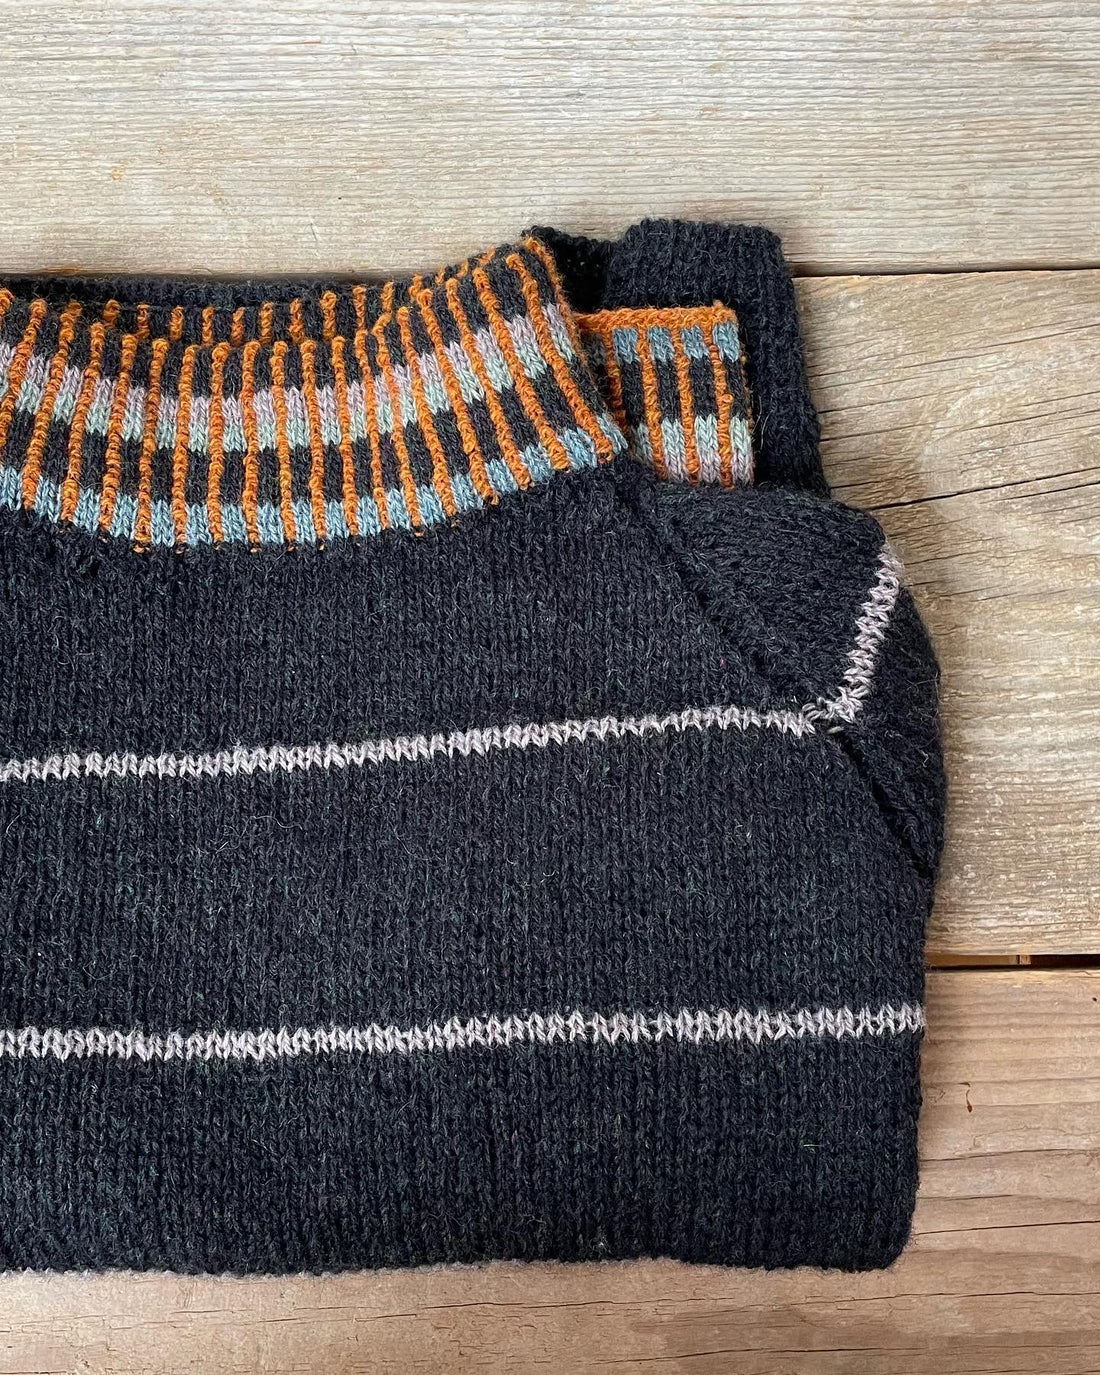 Biches & Bûches The Selenite Sweater - pdf pattern in English